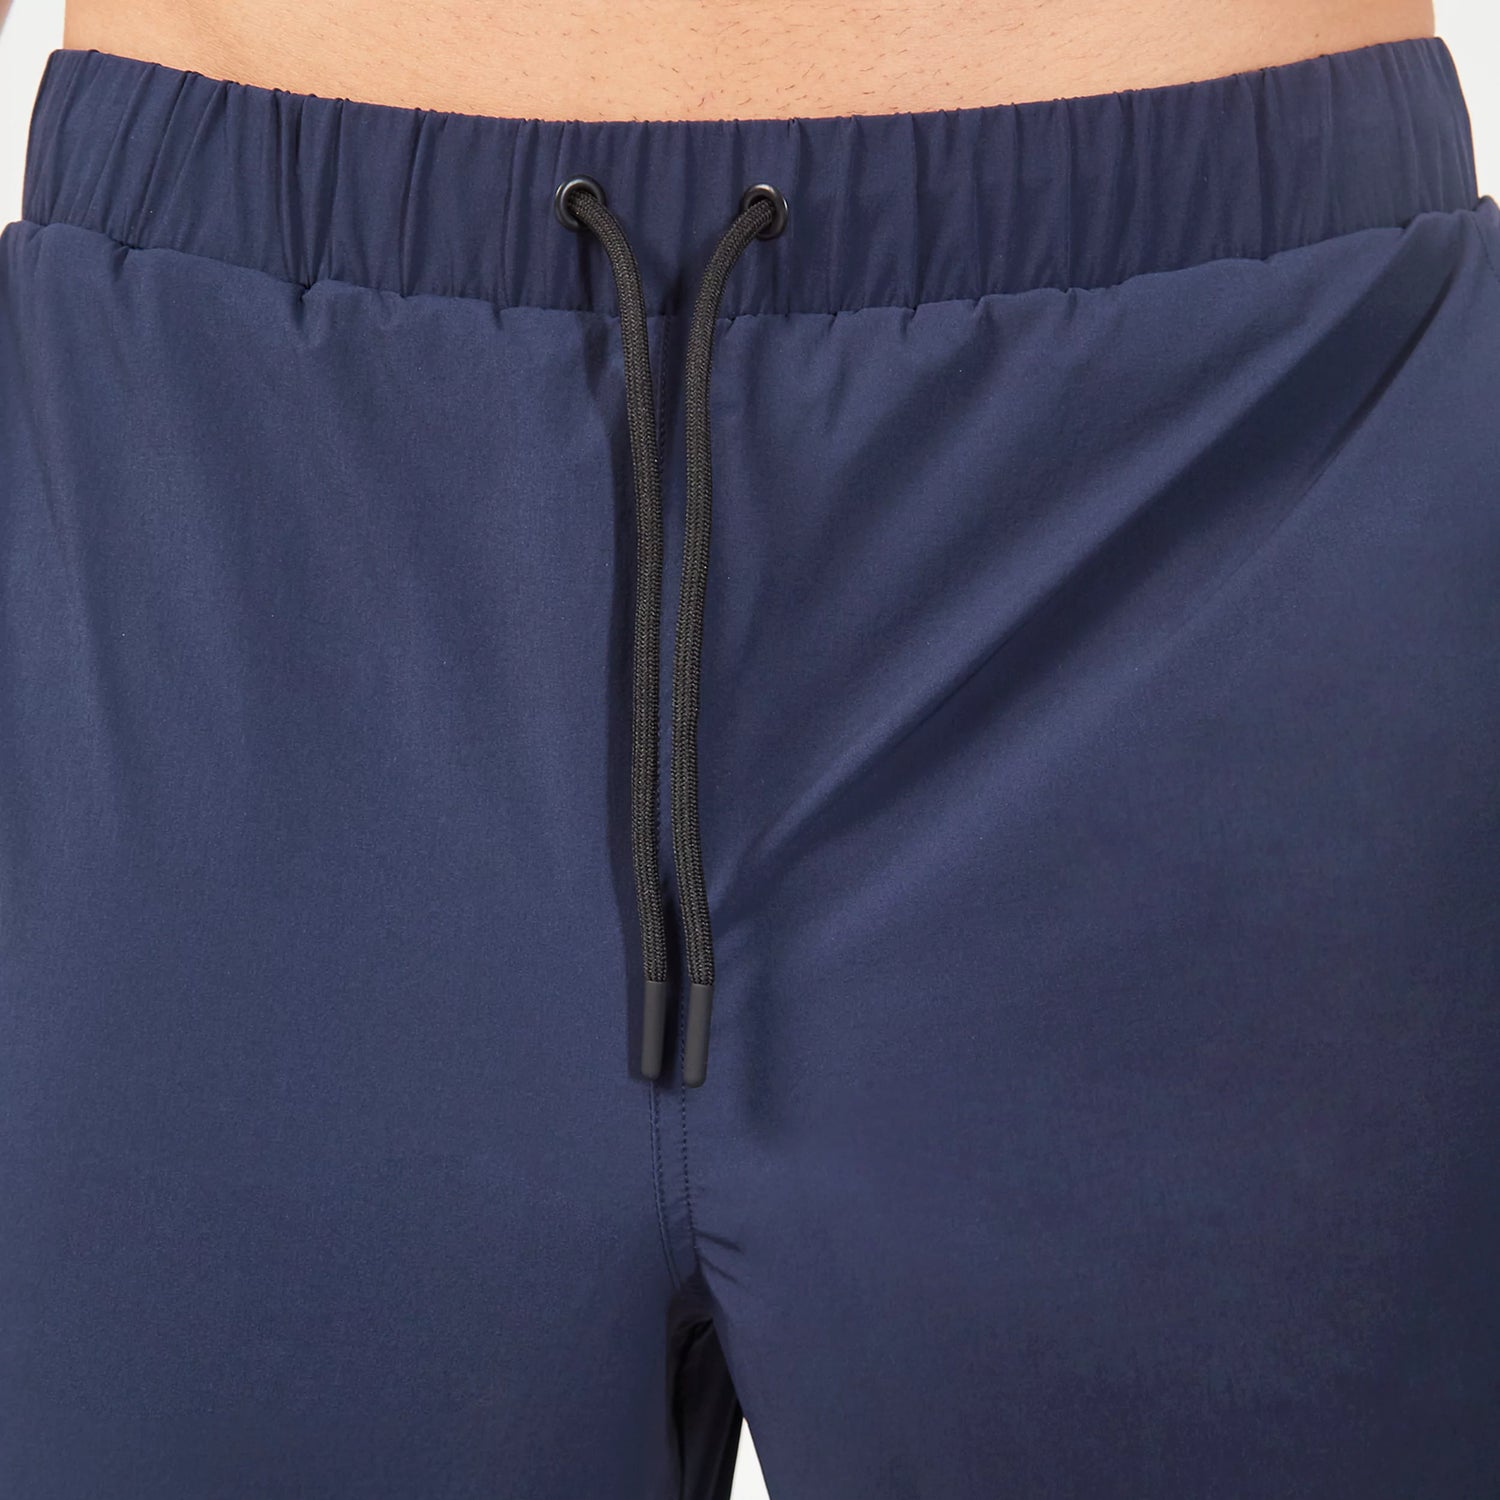 AE | Core 7 inch 2-in-1 Wordmark Shorts - Navy | Gym Shorts | SQUATWOLF